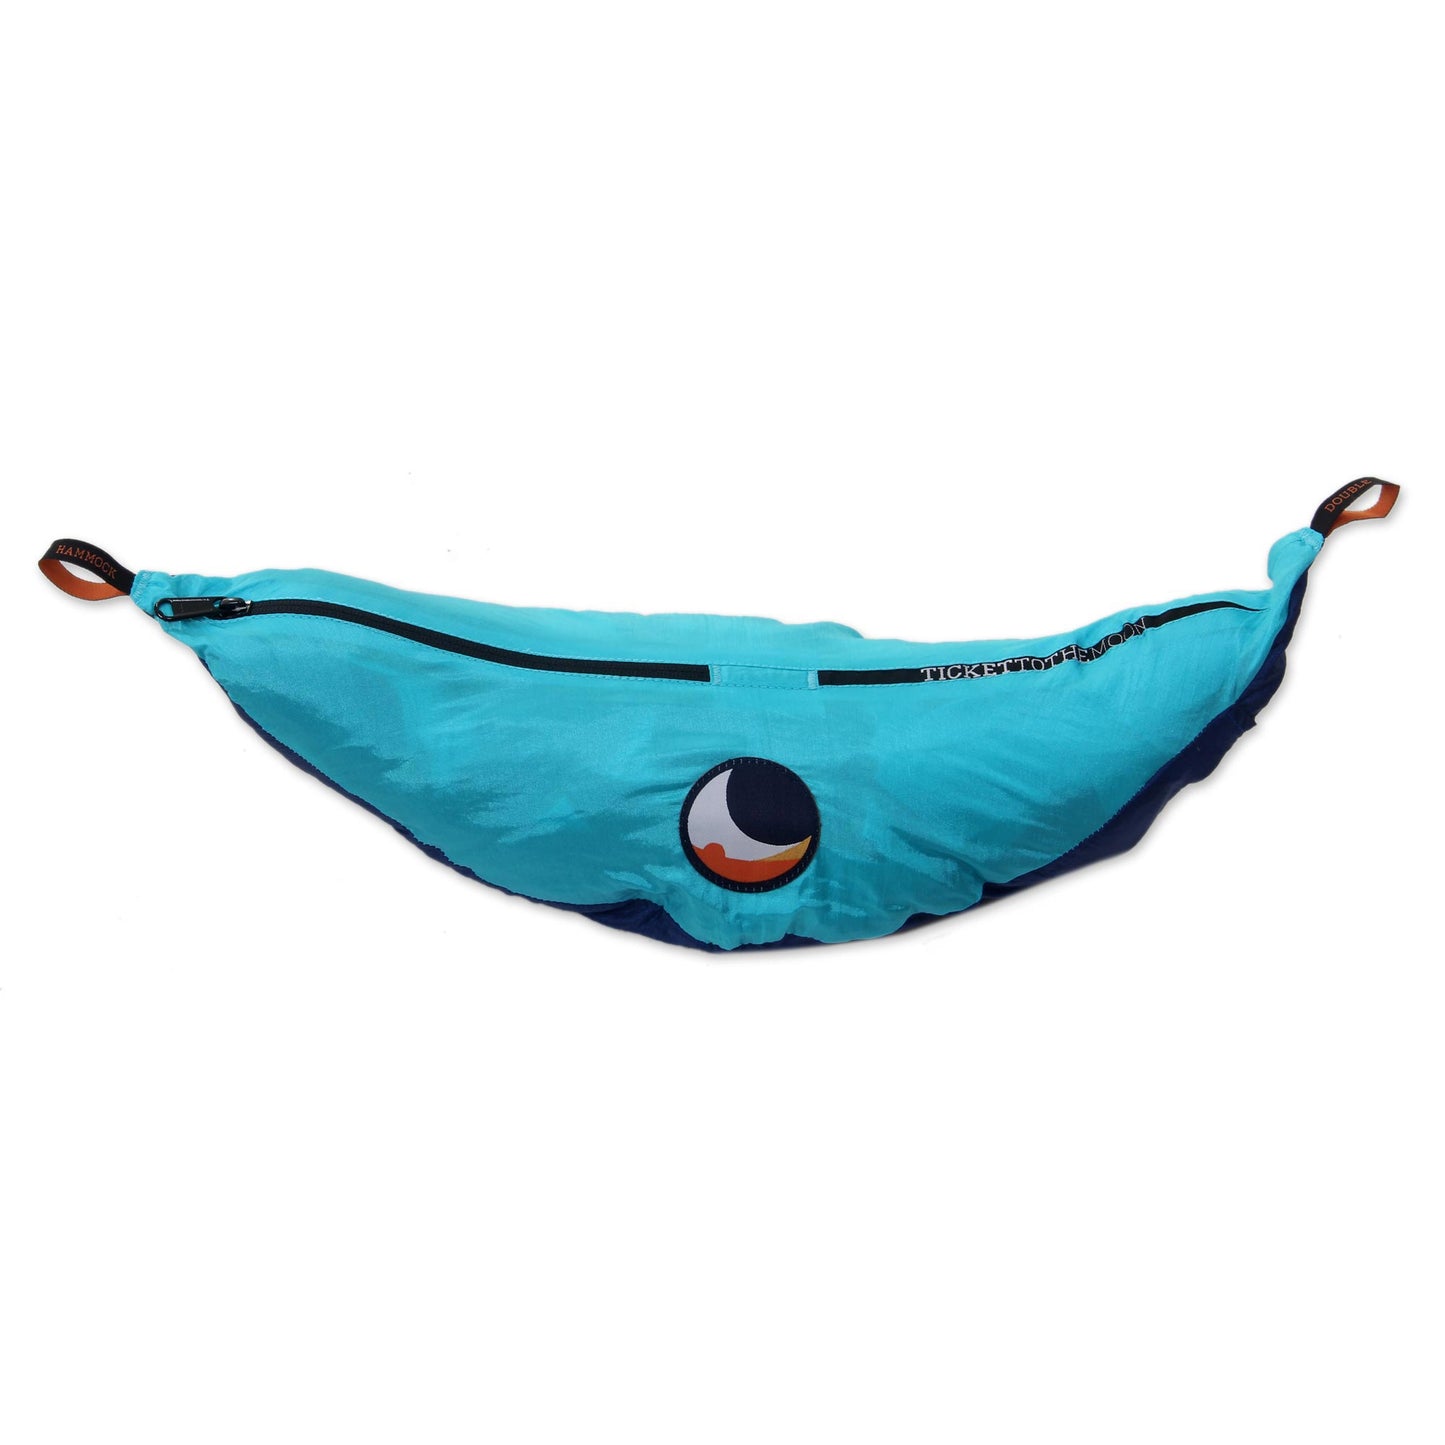 Sea Dreams Portable Parachute Fabric Hammock Blue Turquoise (Double)